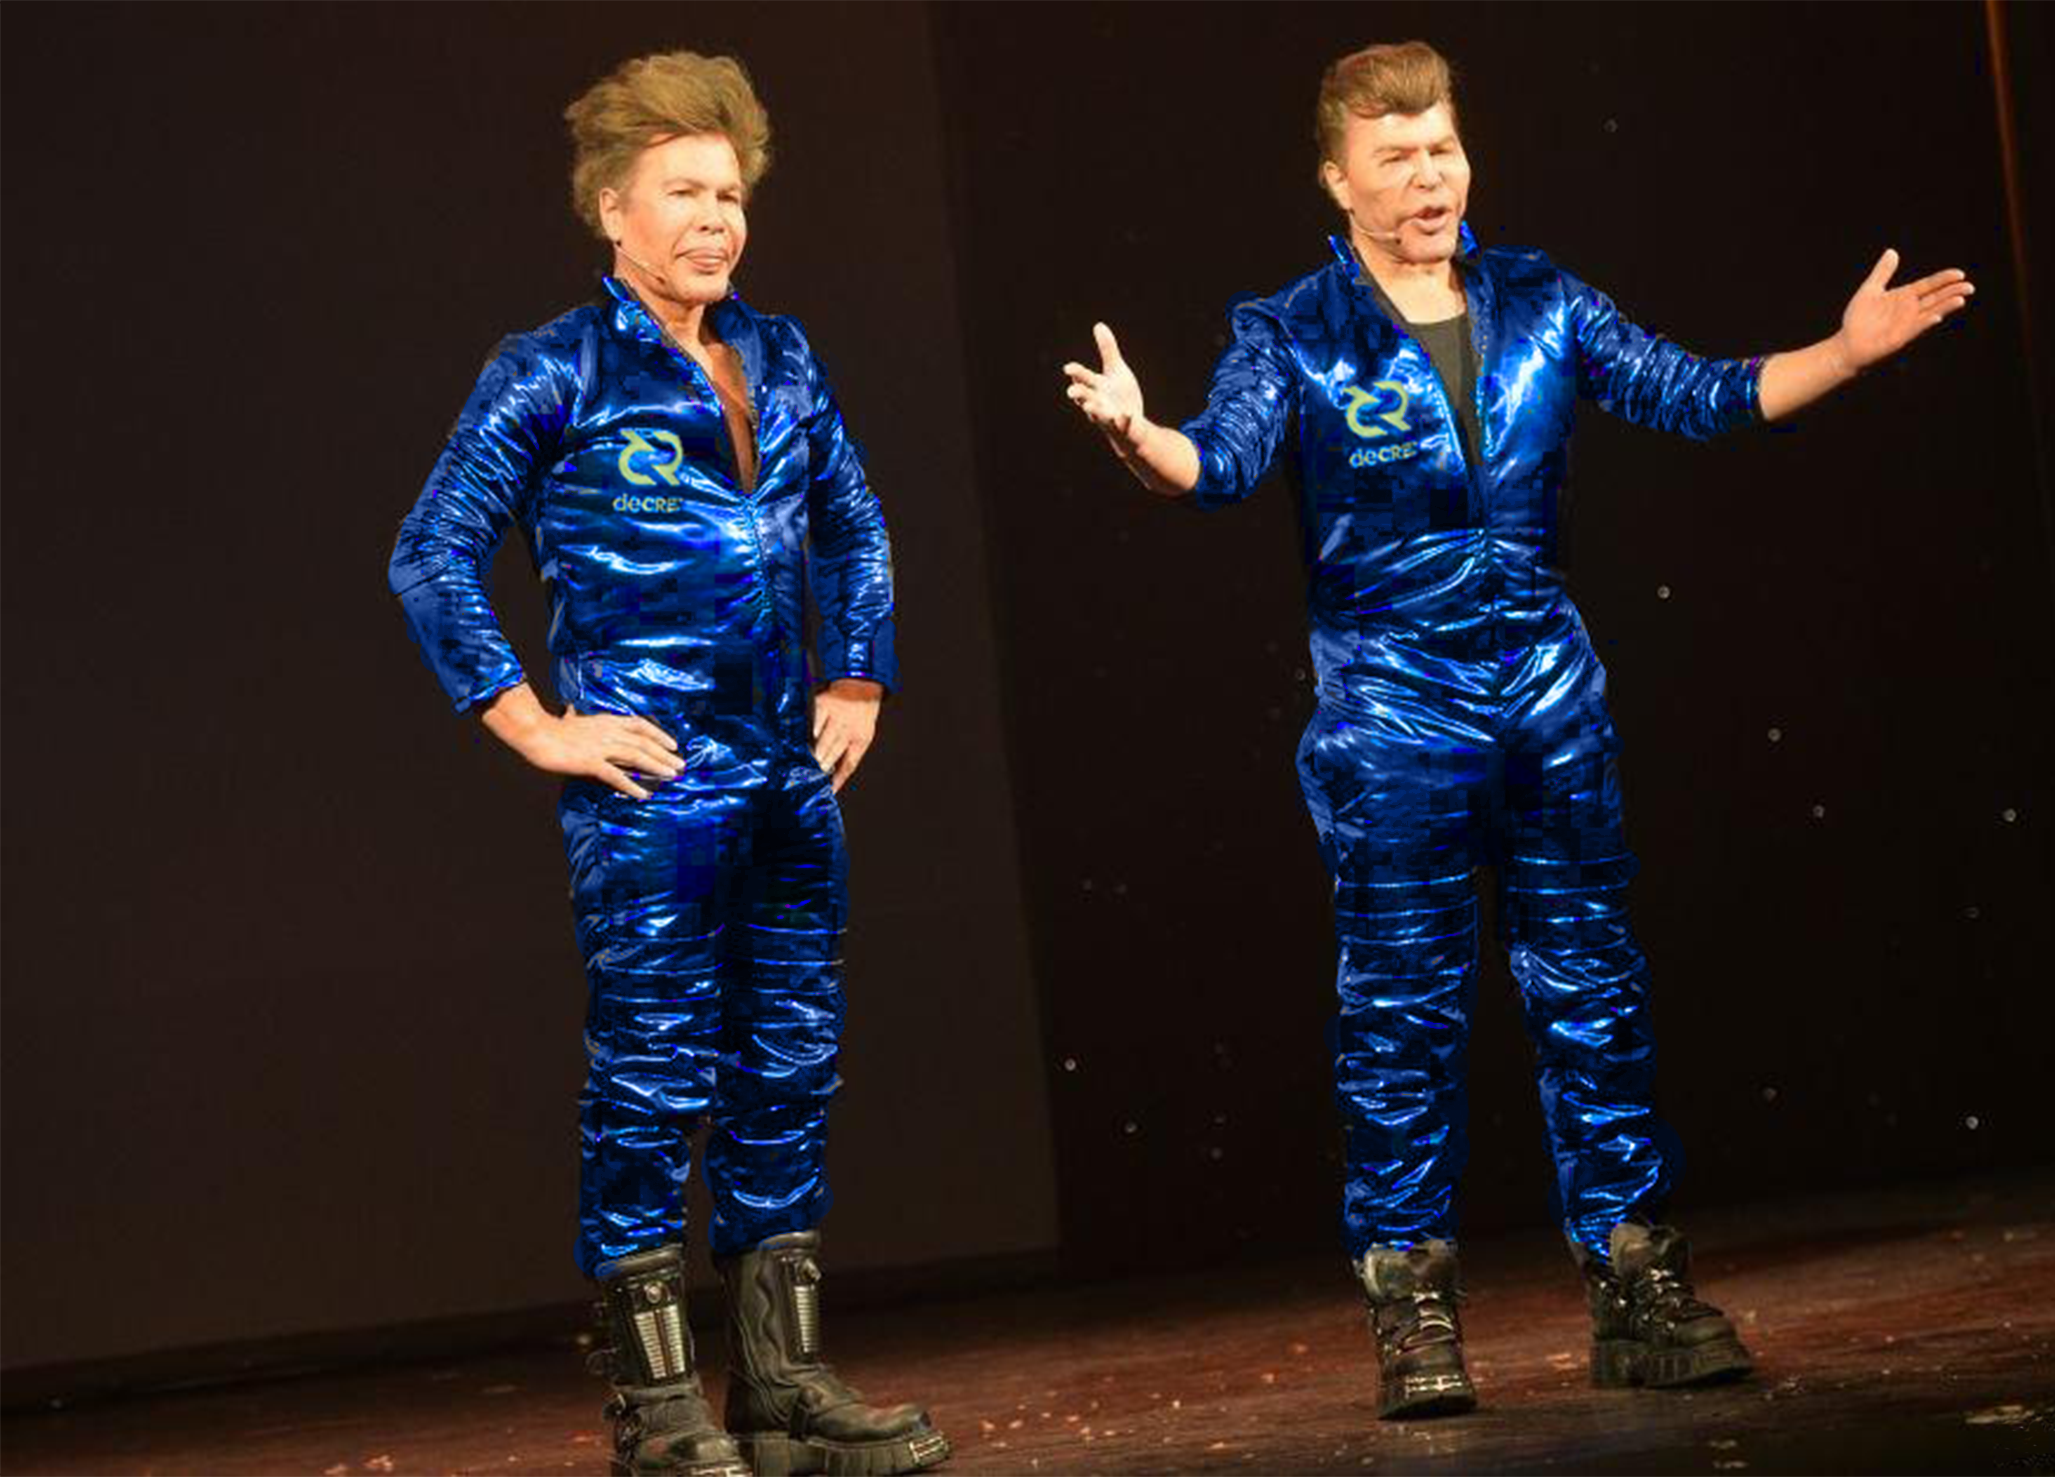 bogdanoff-twins-dcr-space-suits.png